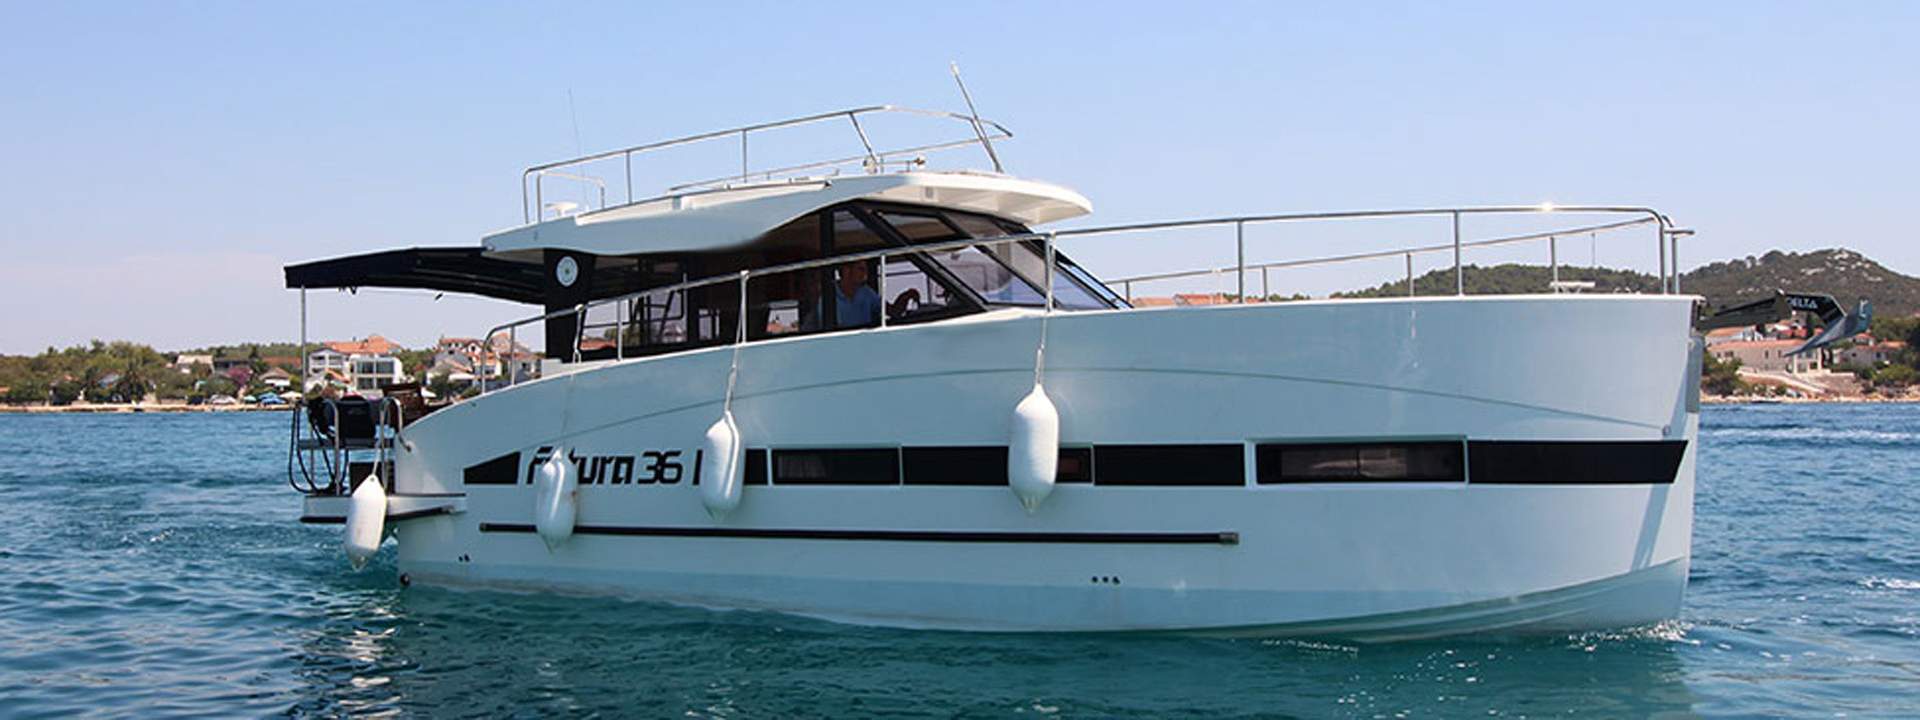 Motor boat Futura 36